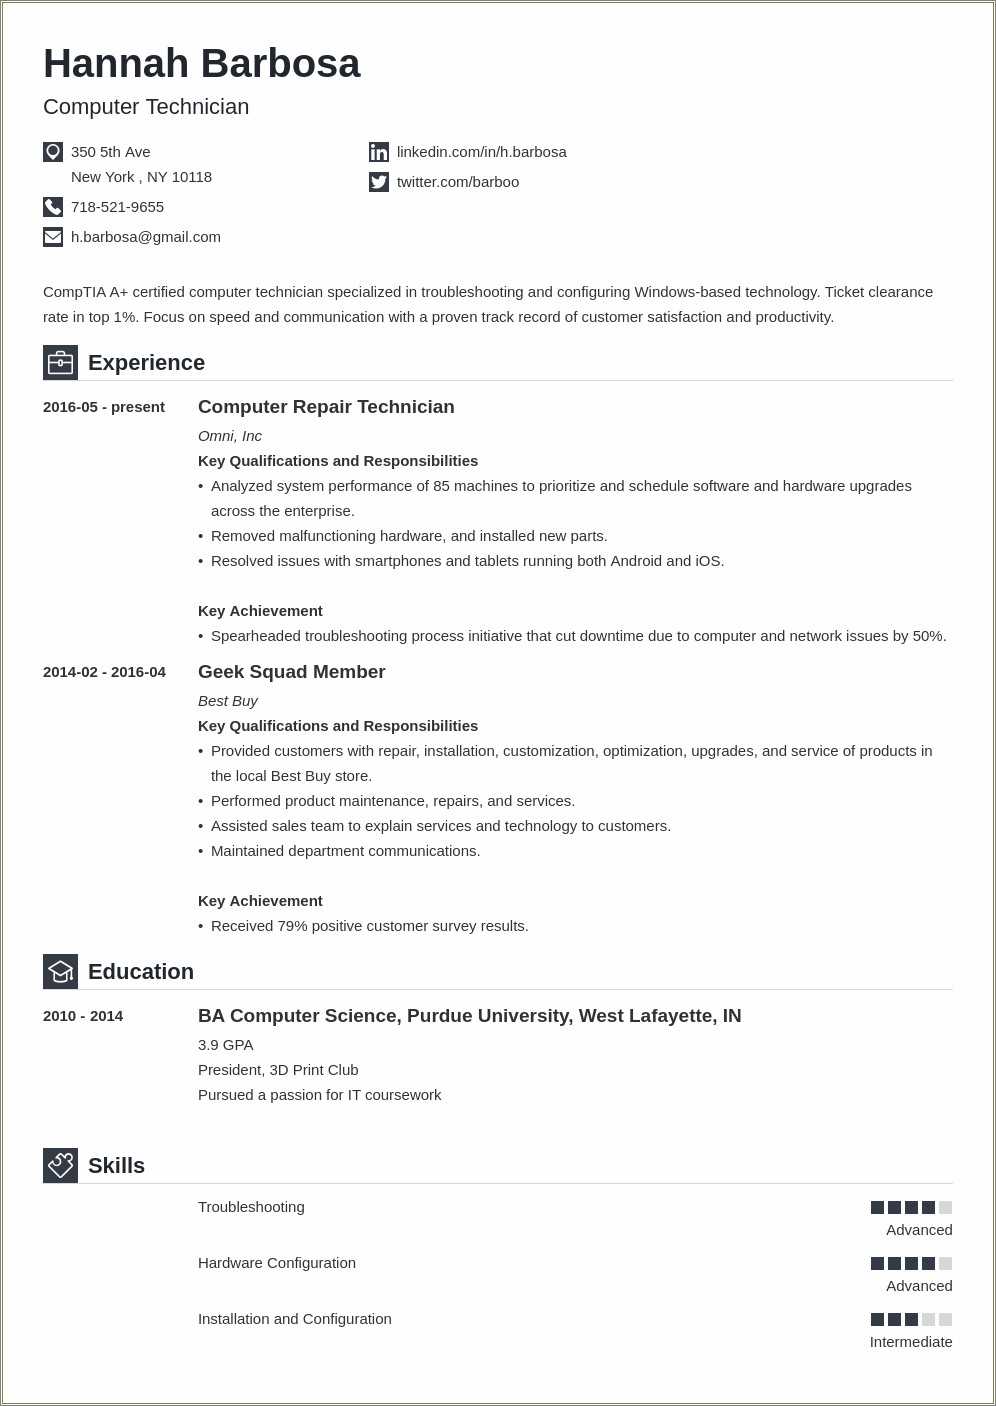 Computer Technician Resume Objective Sample